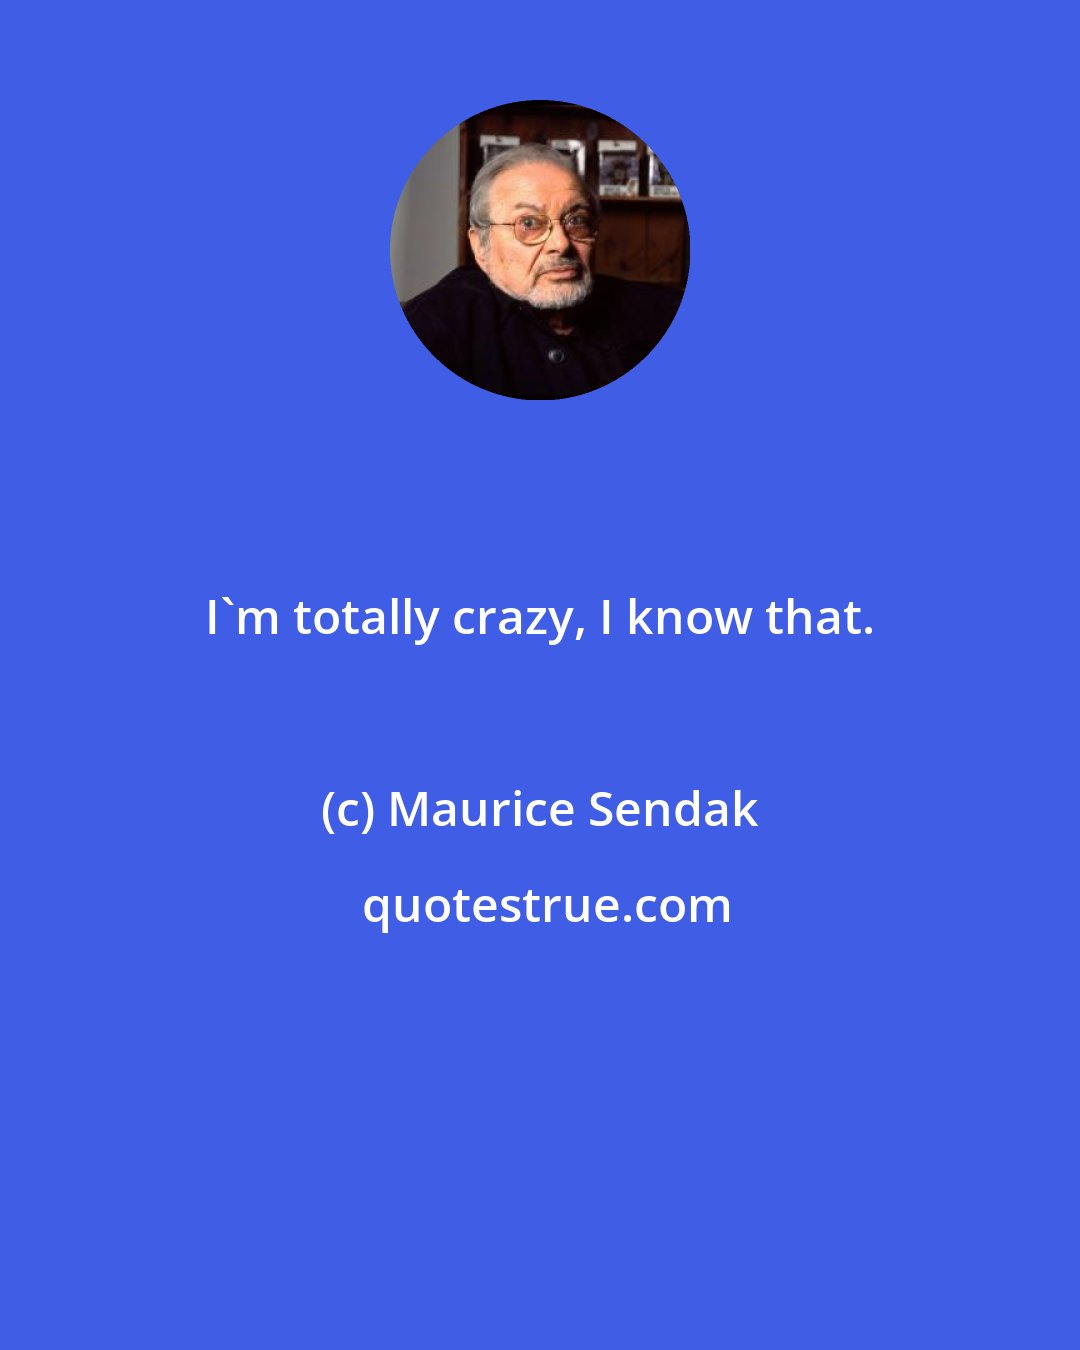 Maurice Sendak: I'm totally crazy, I know that.